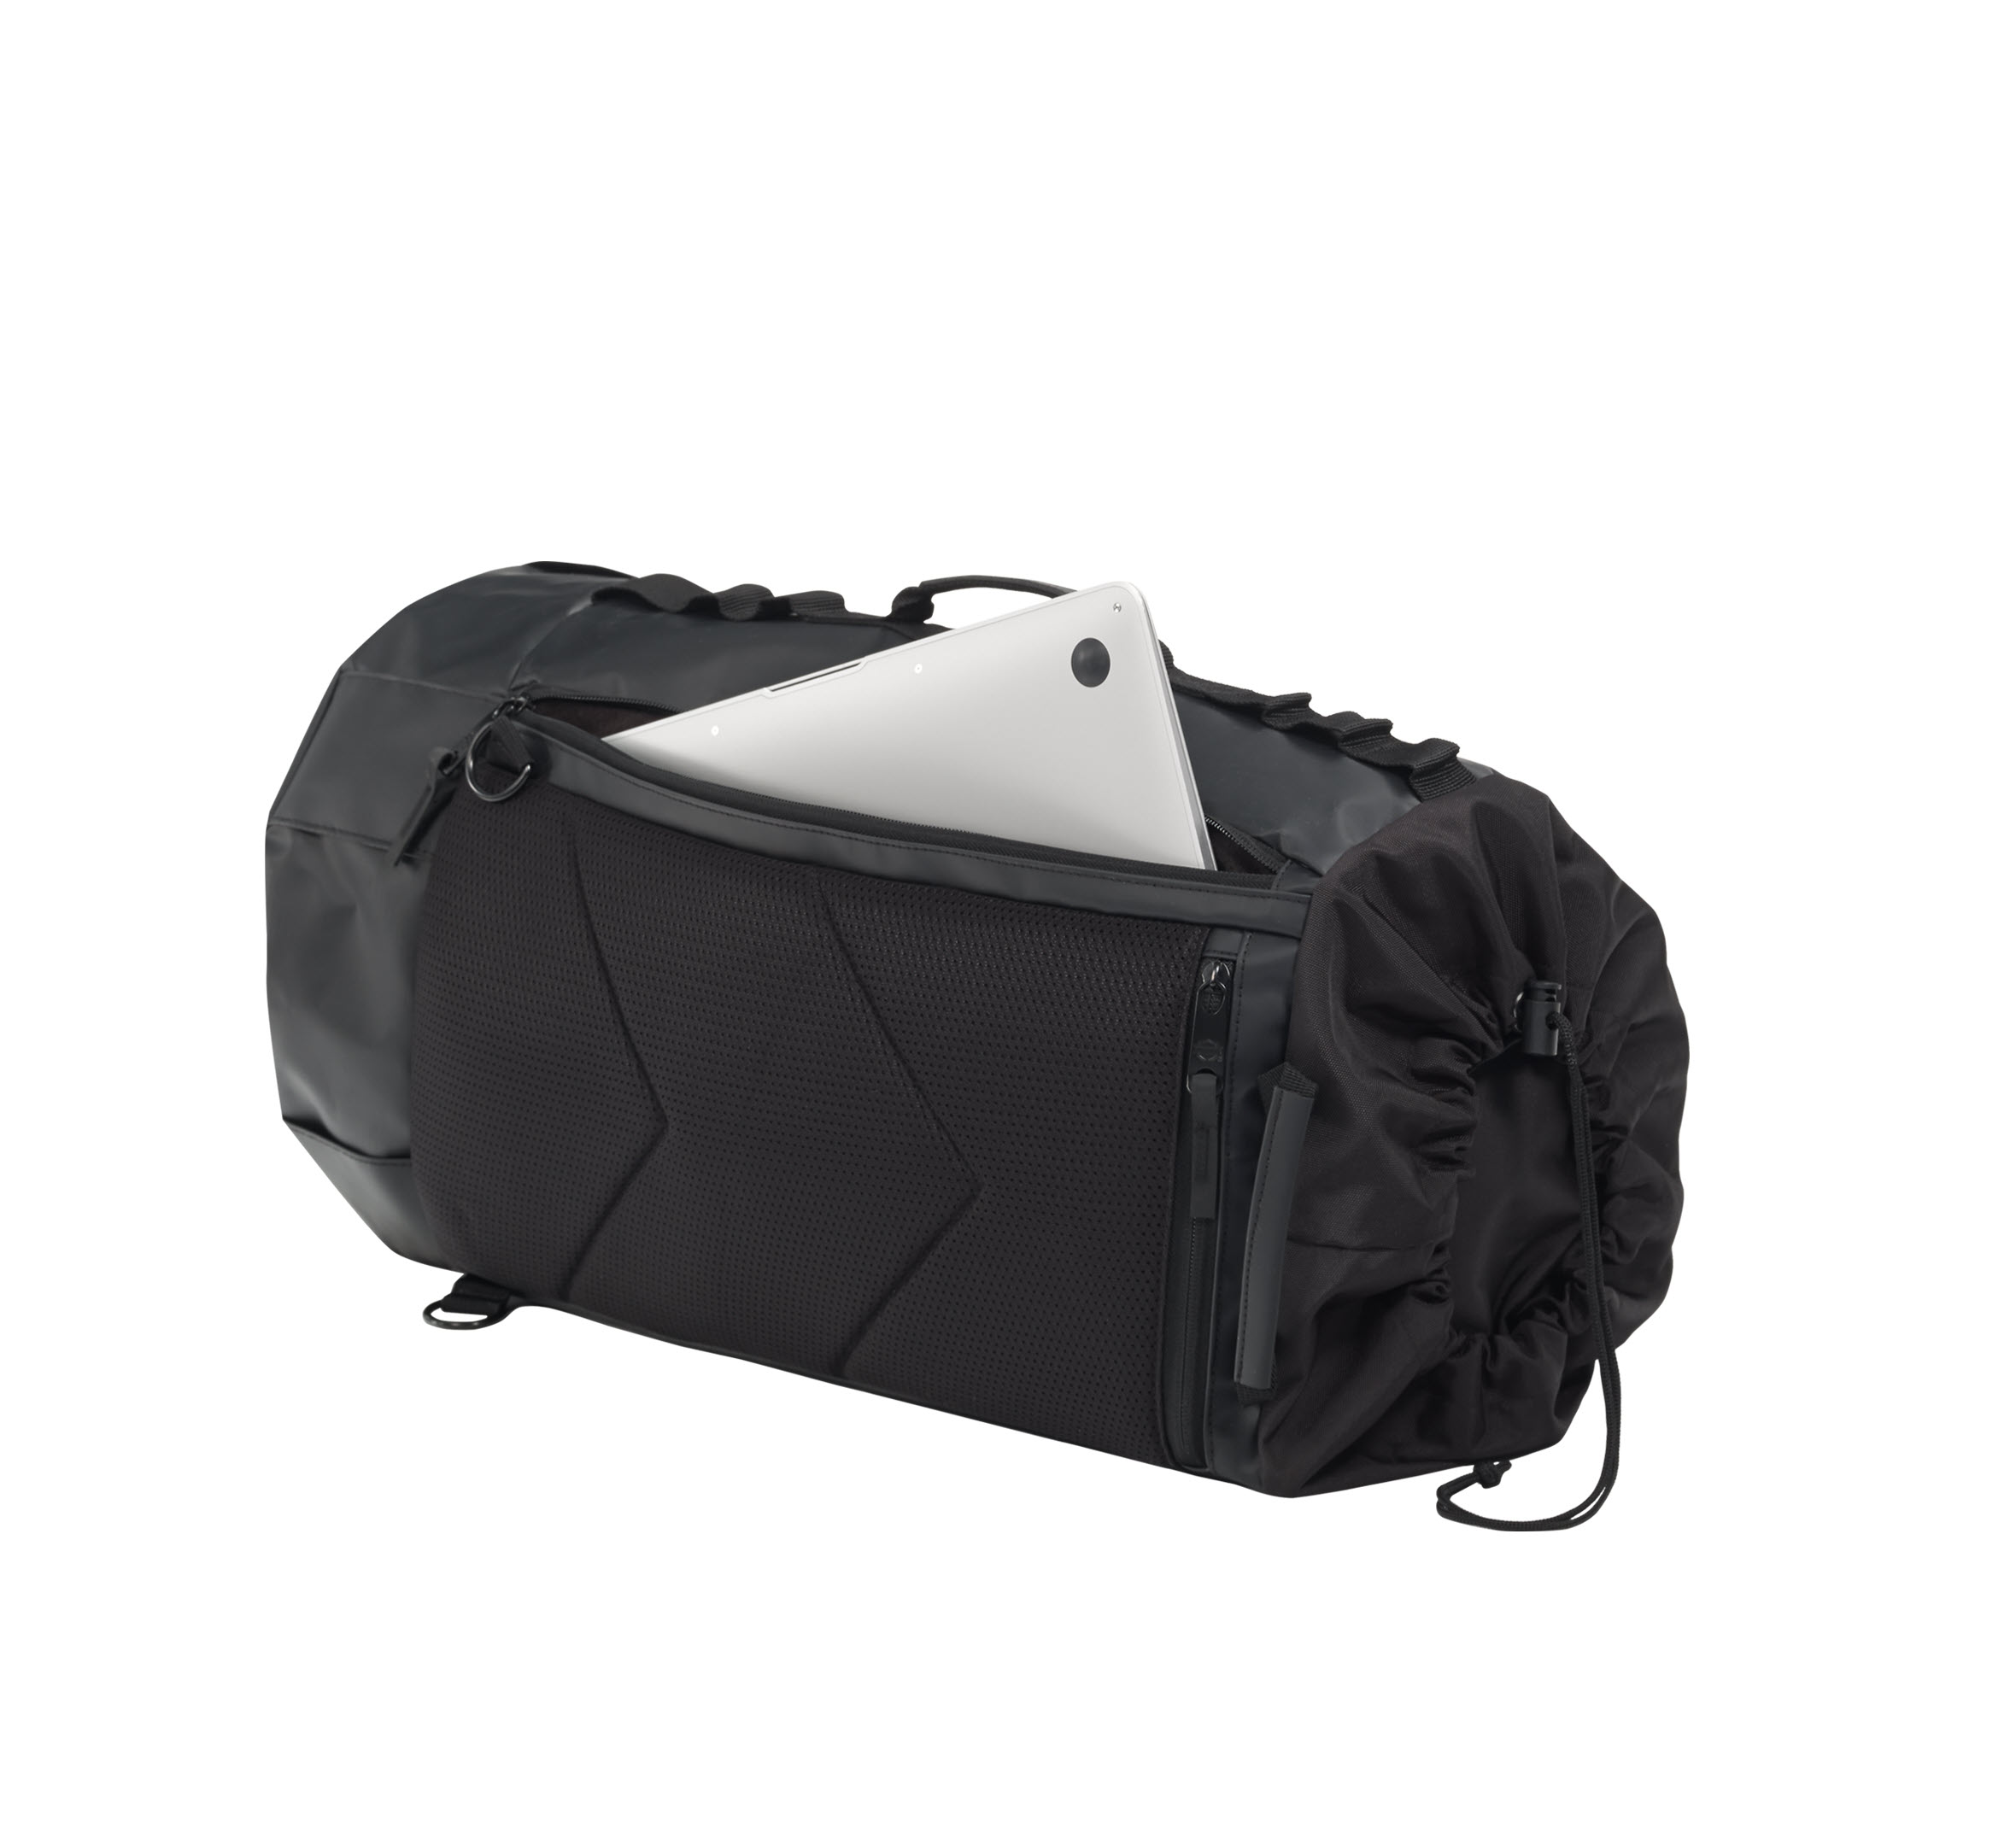 Hybrid Duffel Backpack with Hideaway backpack straps | Harley